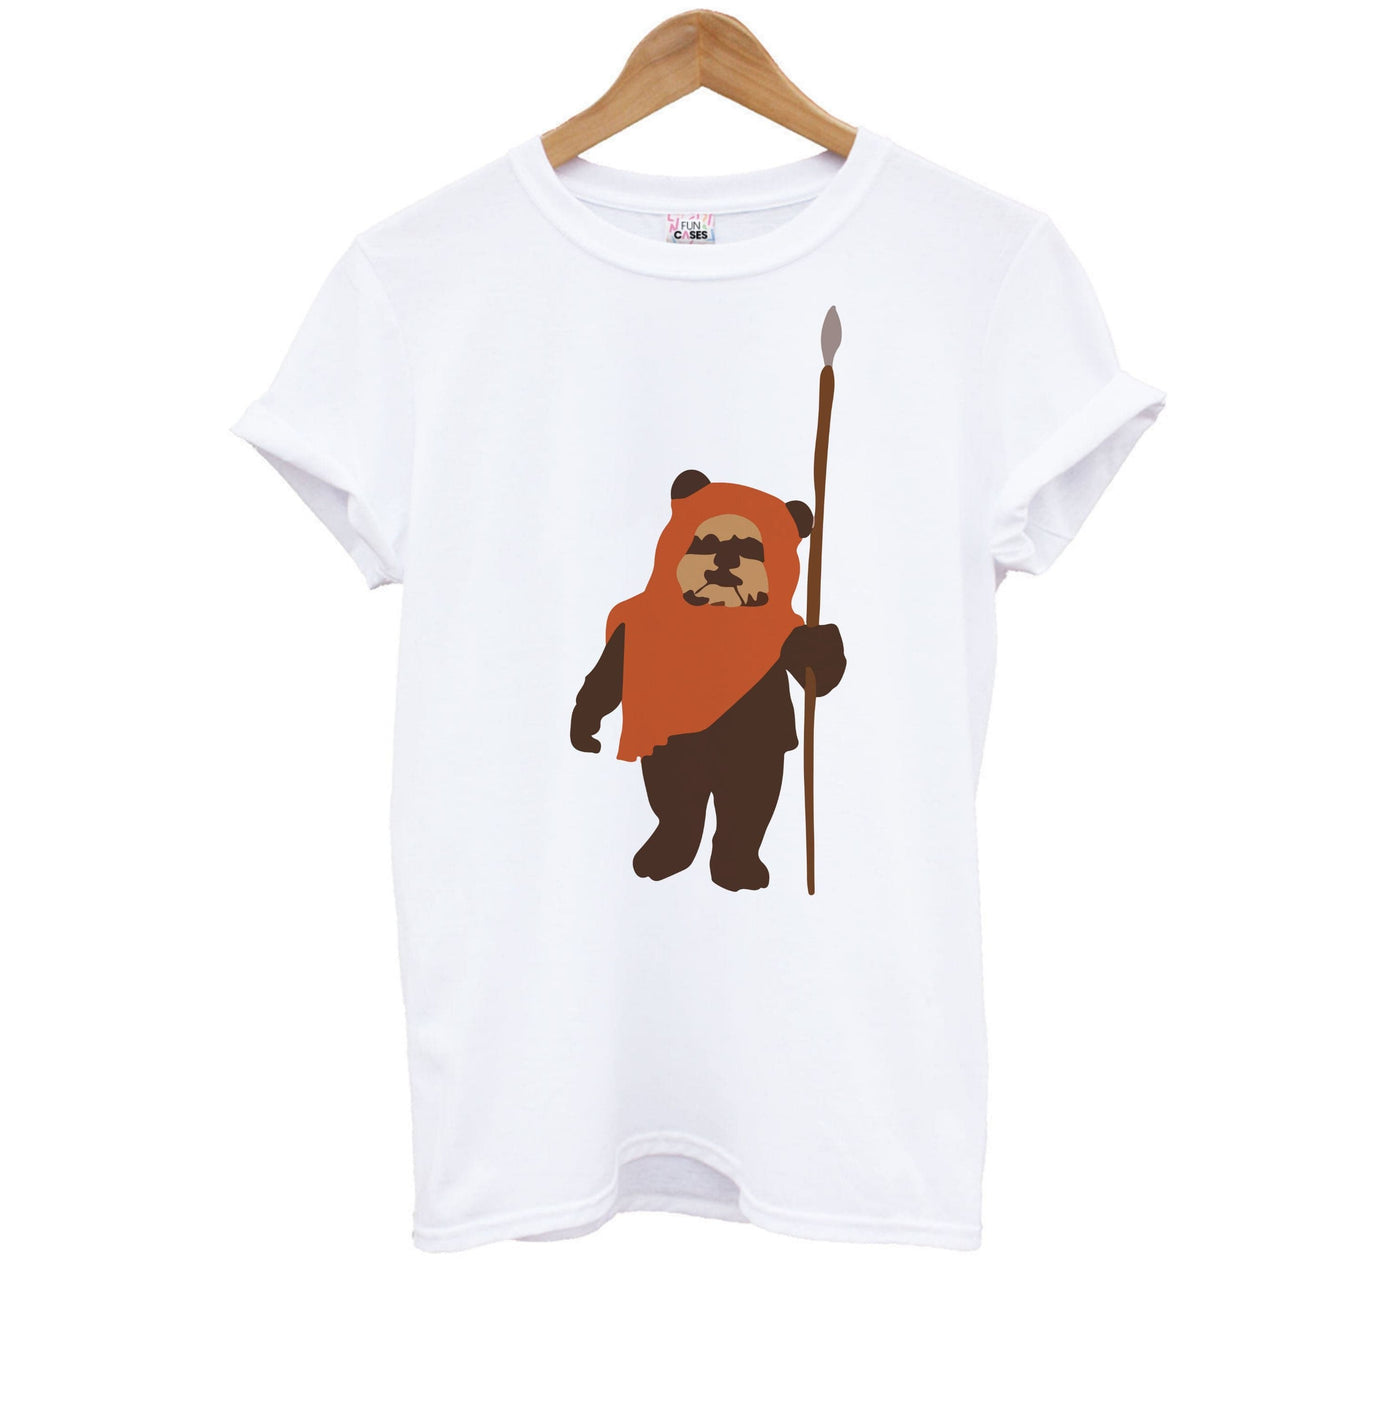 Ewok - Star Wars Kids T-Shirt